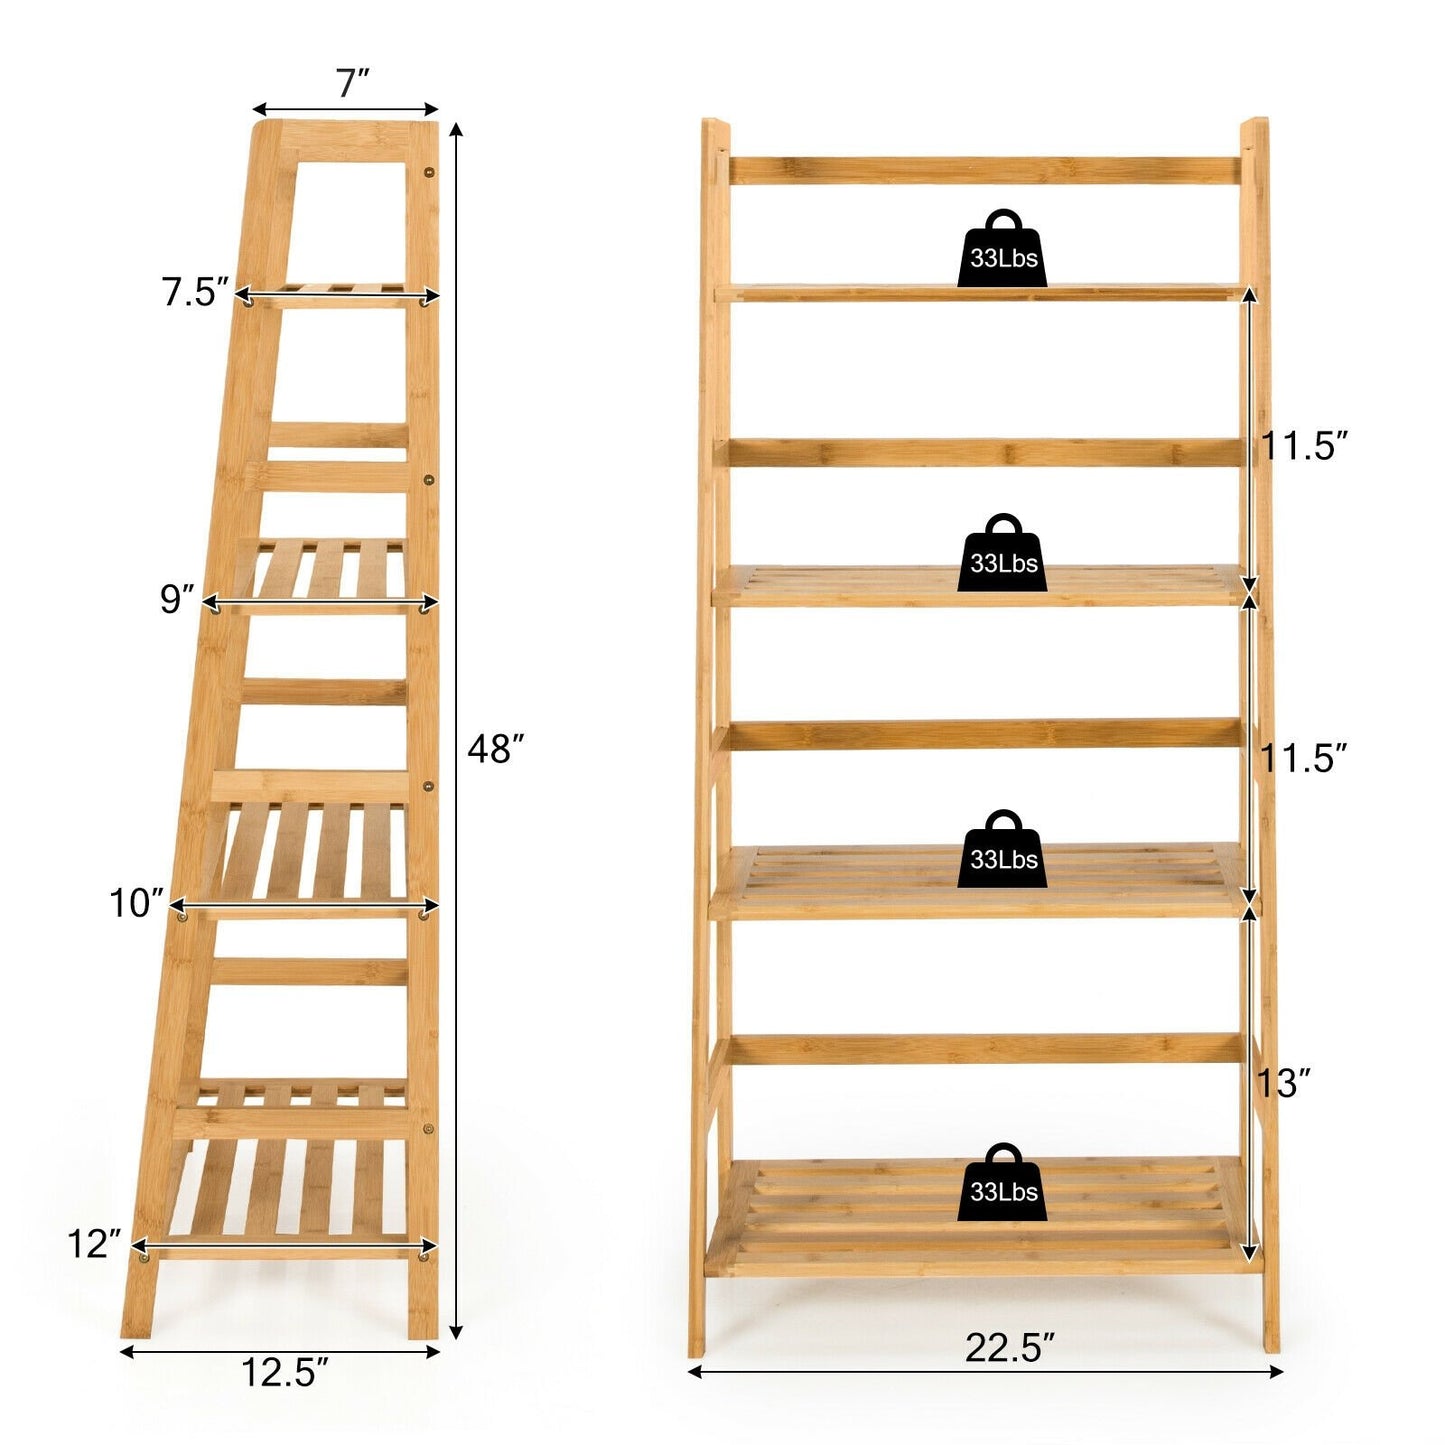 4-Tier Bamboo Bookshelf Ladder Shelf Plant Stand Rack, Natural - Gallery Canada